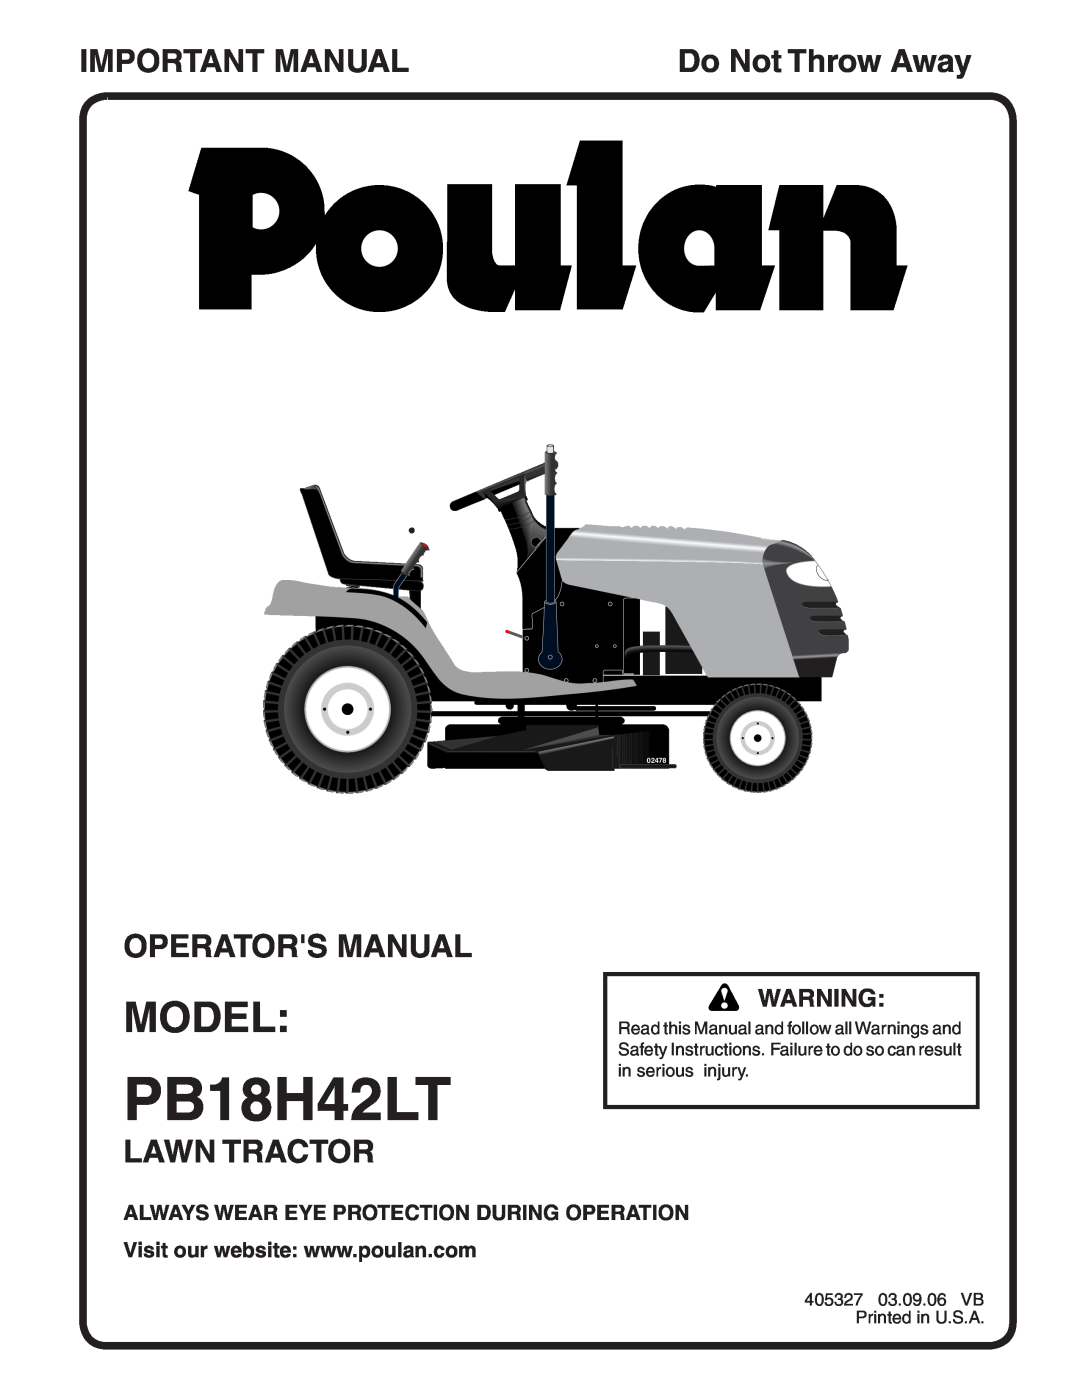 Poulan PB18H42LT manual Model, Important Manual, Operators Manual, Lawn Tractor, Do Not Throw Away, 02478 